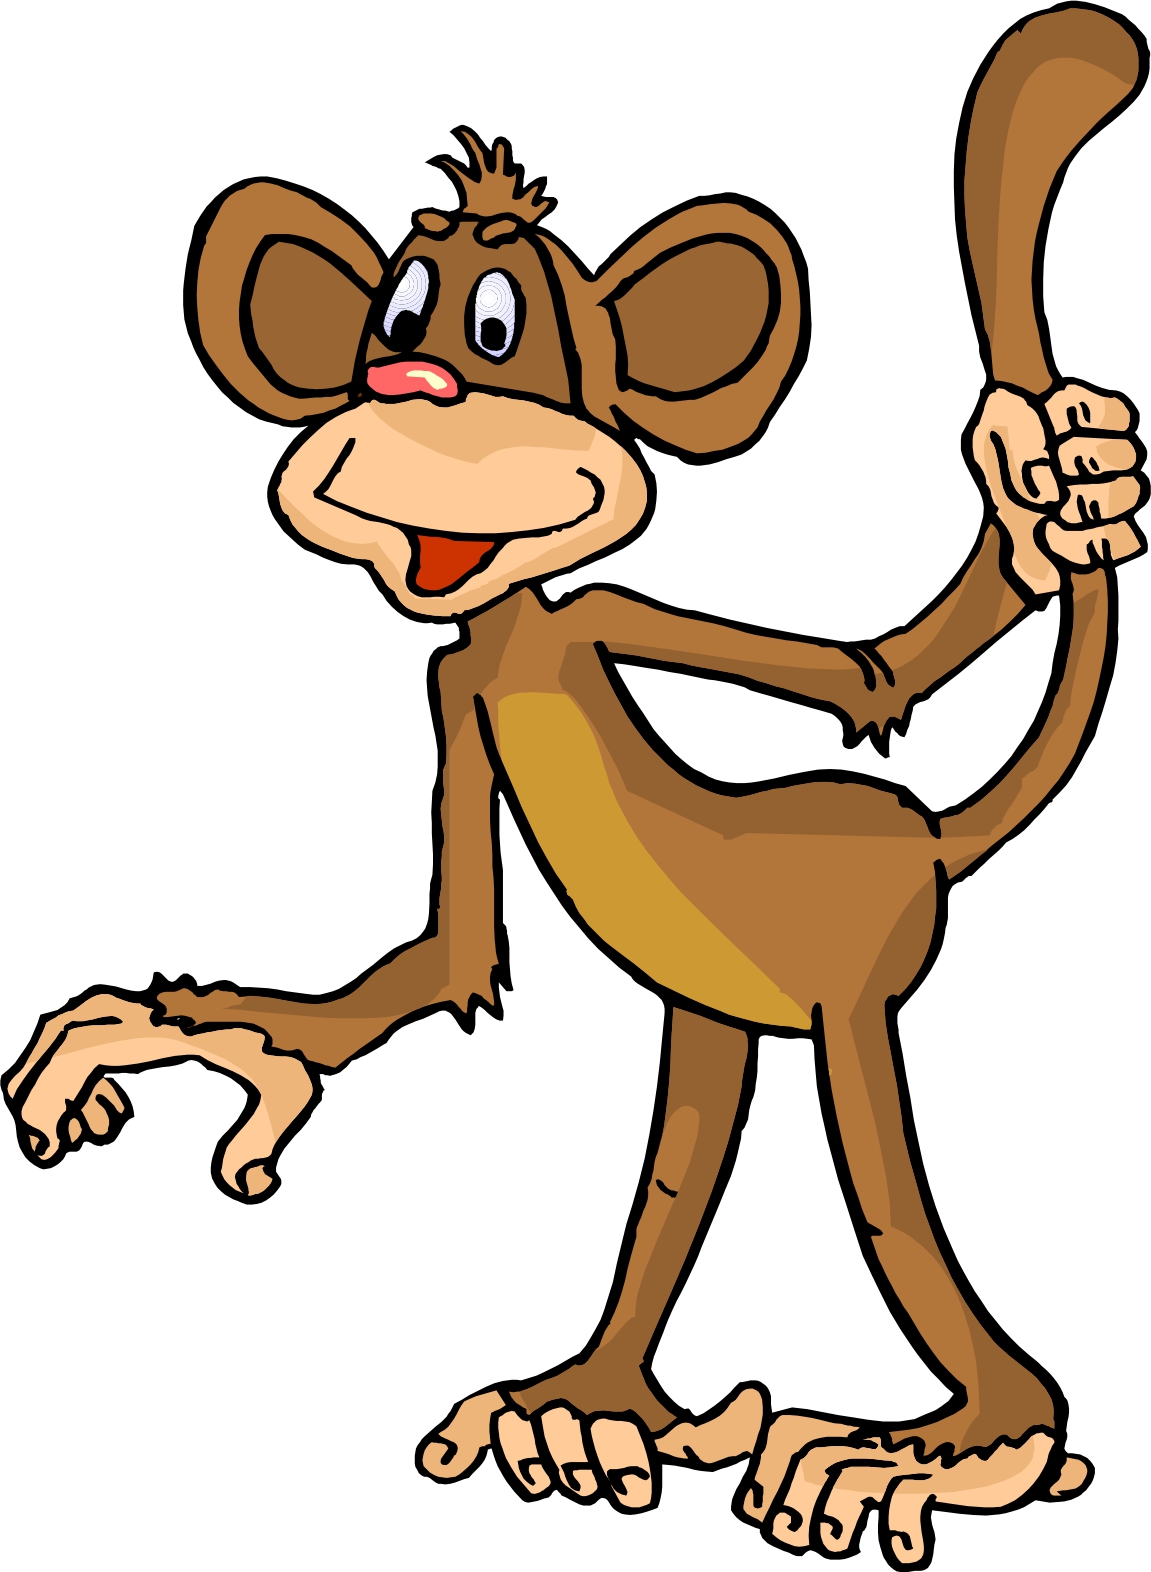 Cartoon Monkey Tail - ClipArt Best